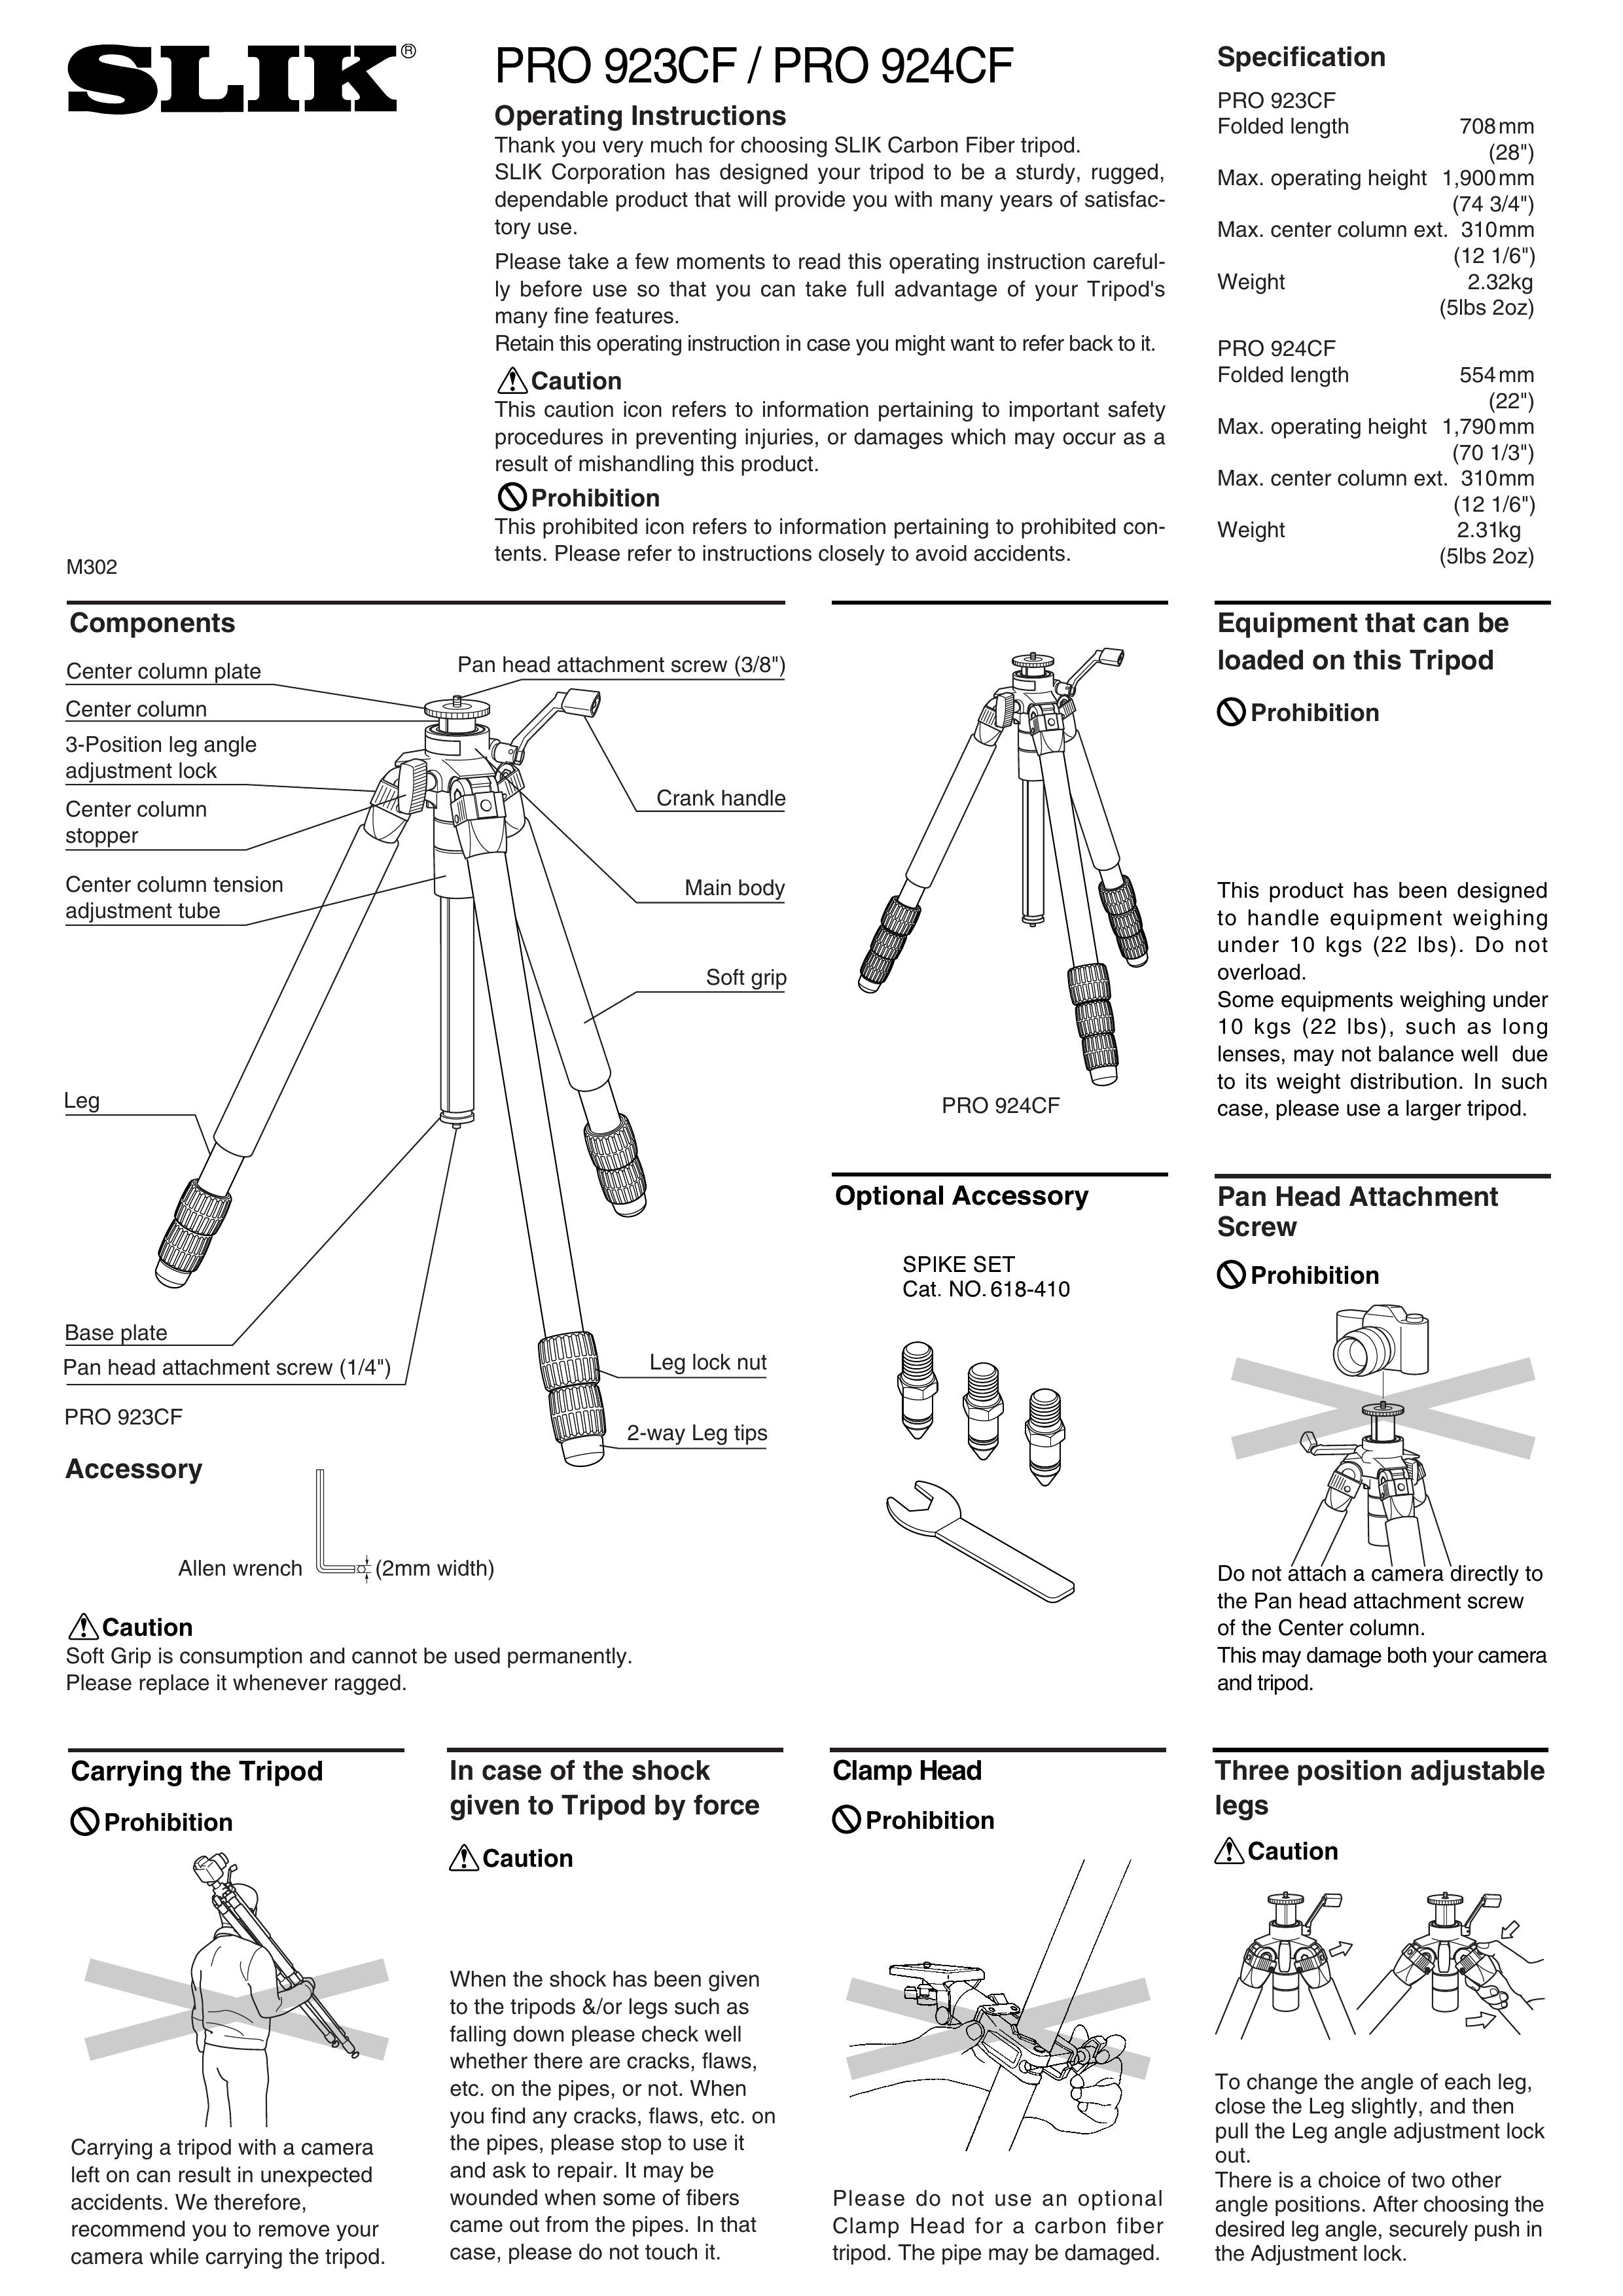 SLIK PRO 924CF Camera Accessories User Manual